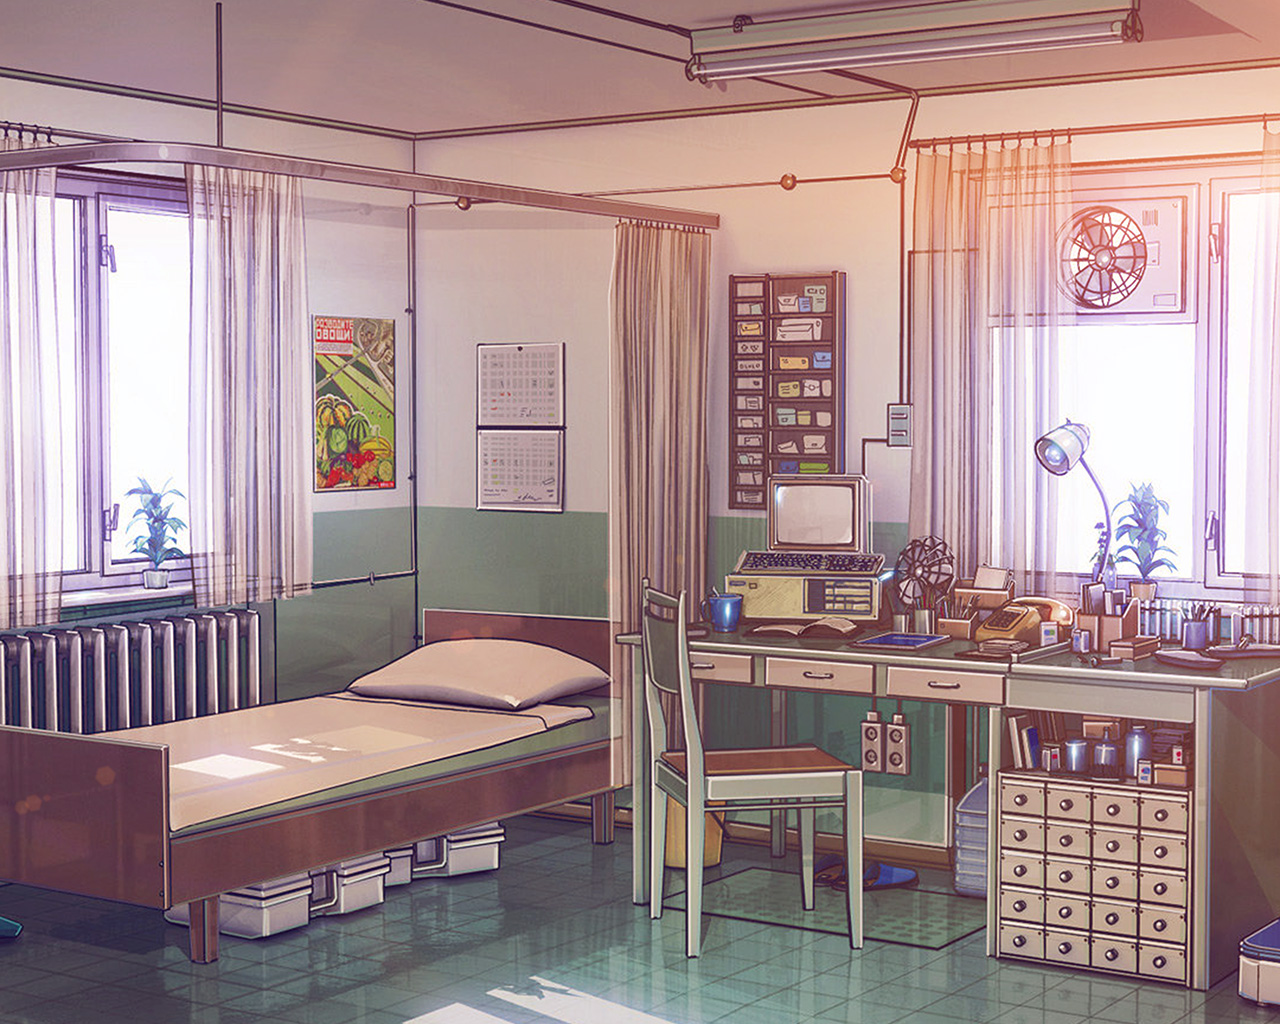 anime bedroom wallpaper,furniture,room,bed,interior design,property